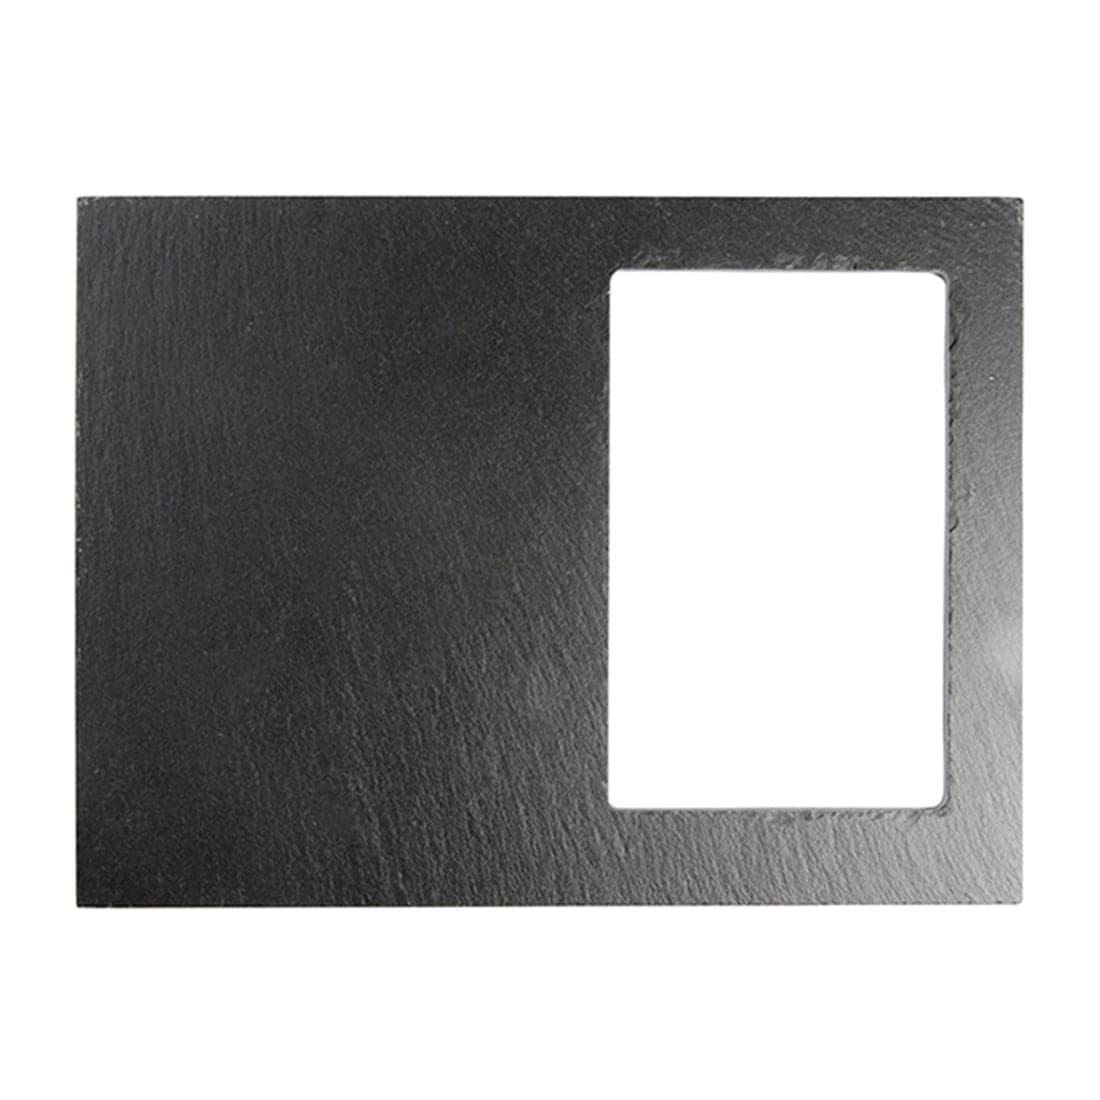 Engravable Slate Frame 25x19cm - Pack of 4 - Joto Imaging Supplies US